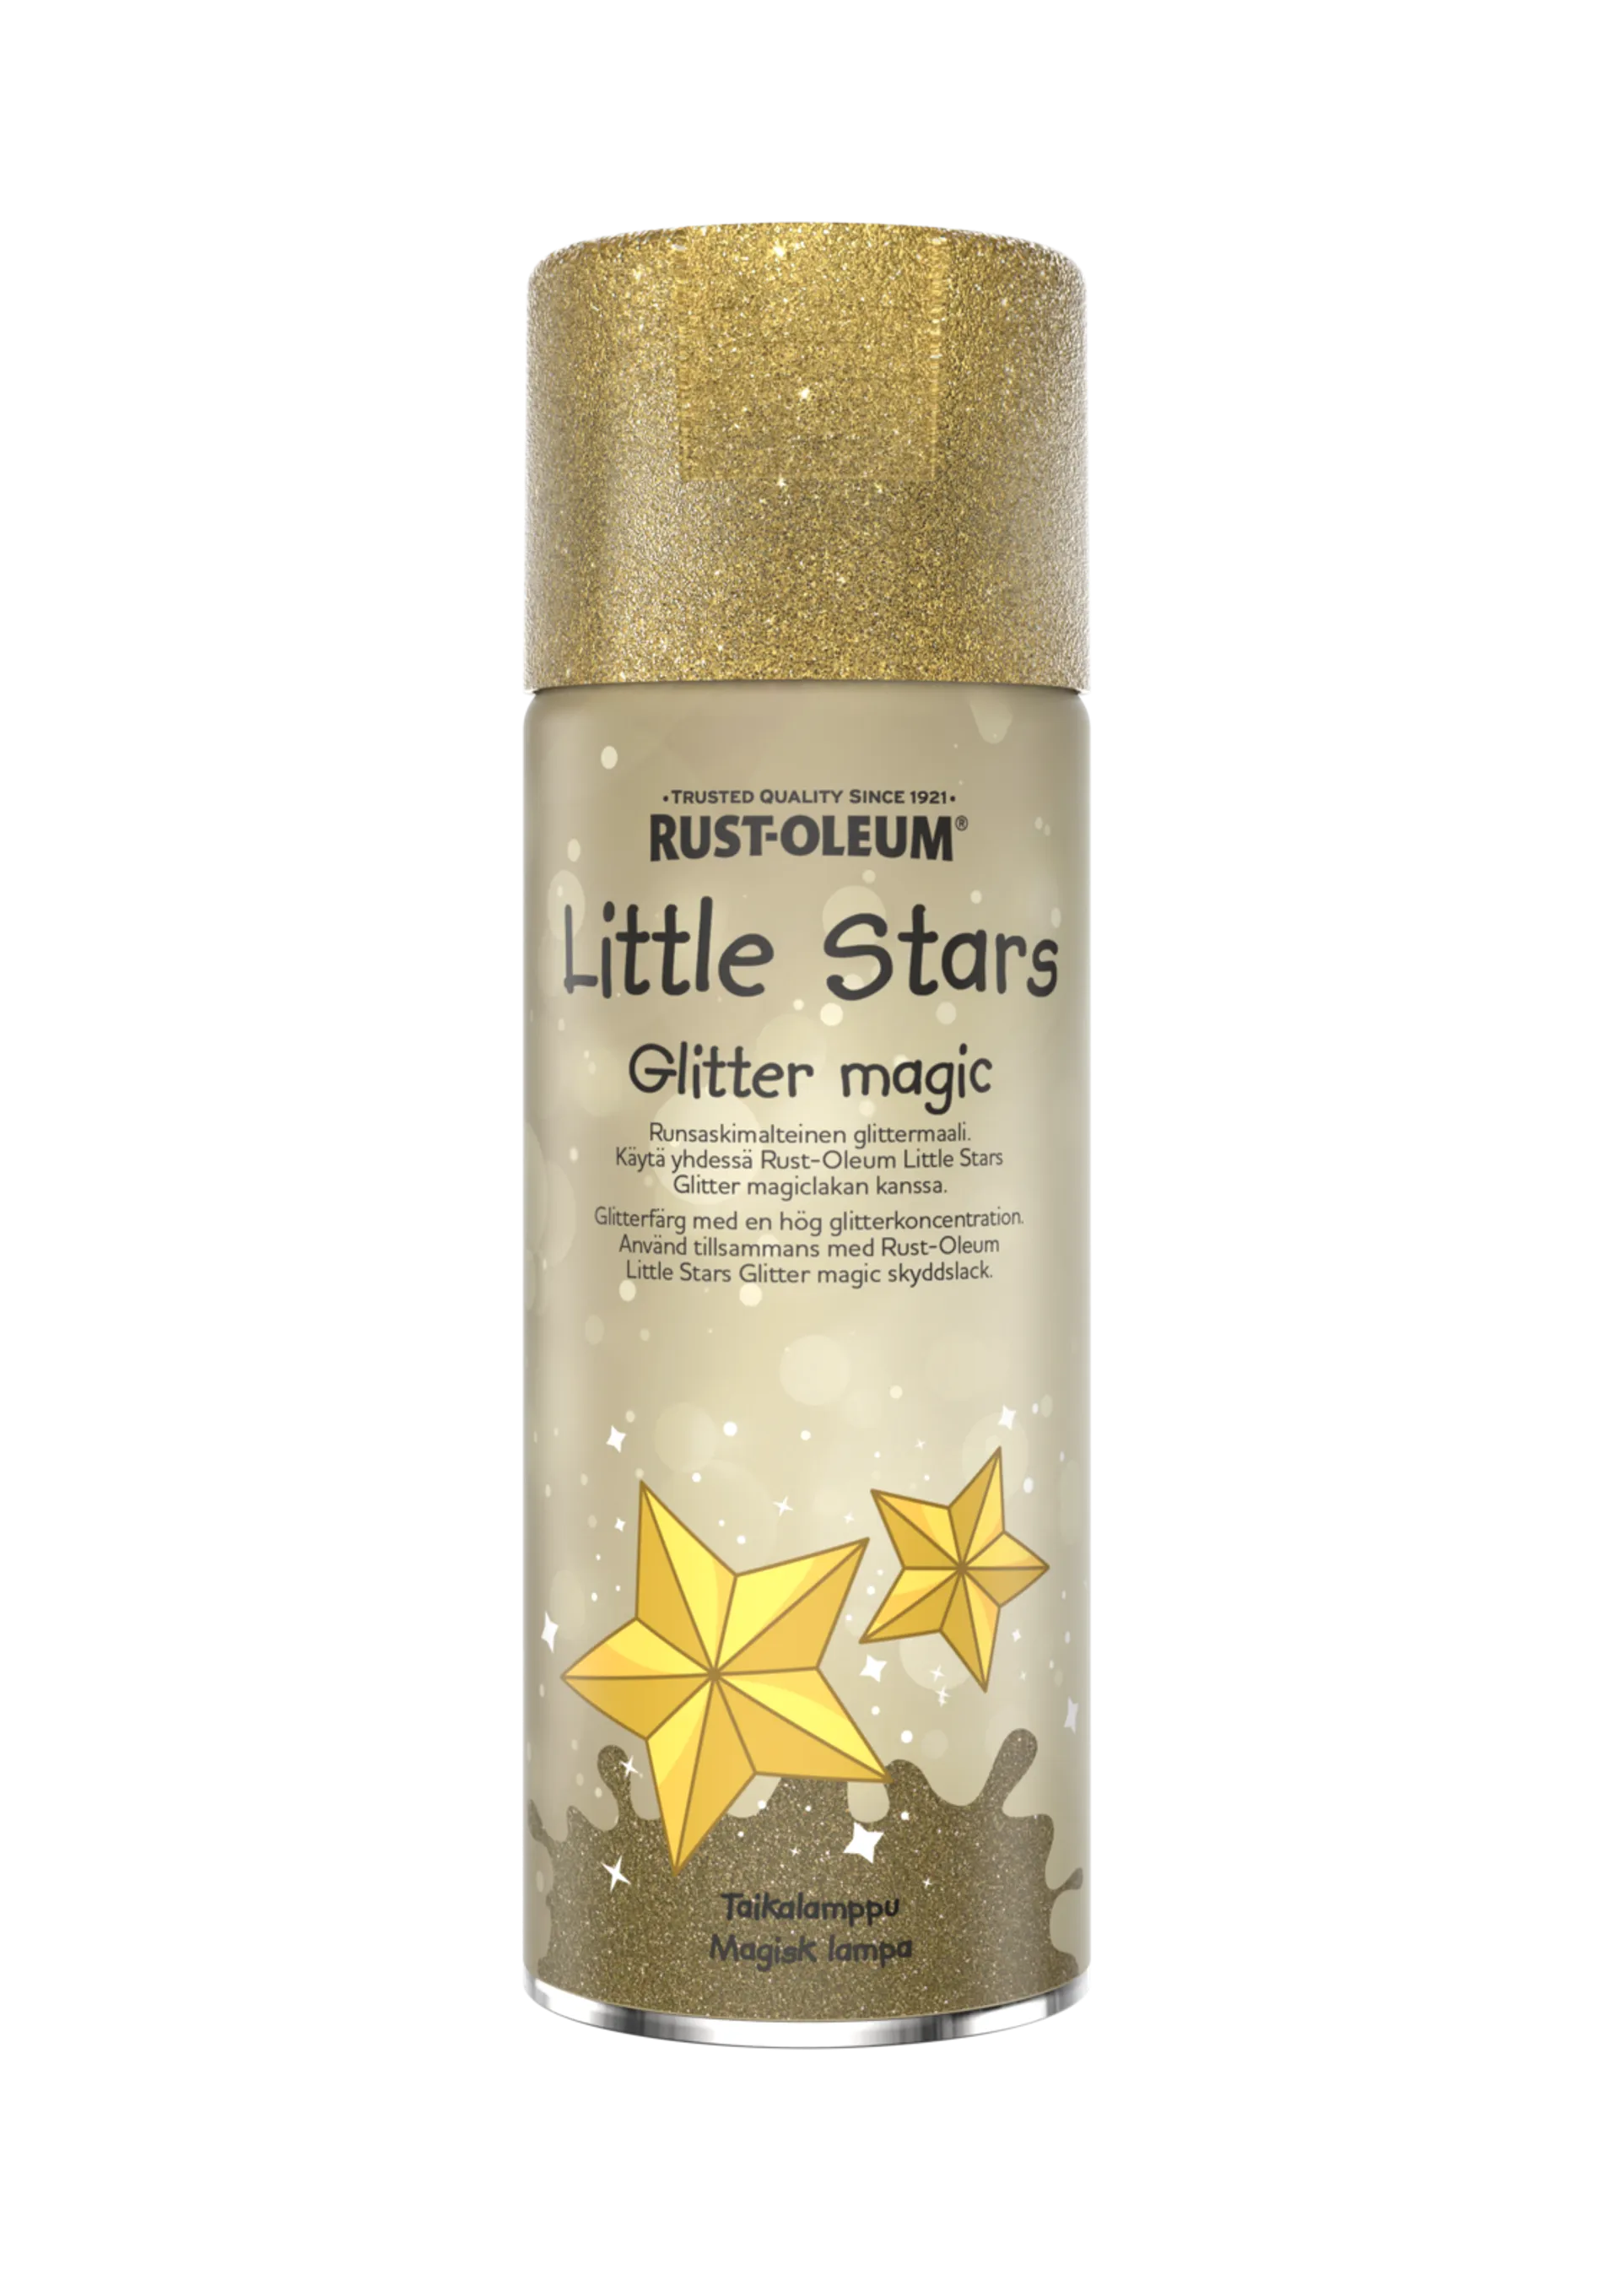 Rust-Oleum Little Stars Glitter Magic spraymaali 400ml Taikalamppu